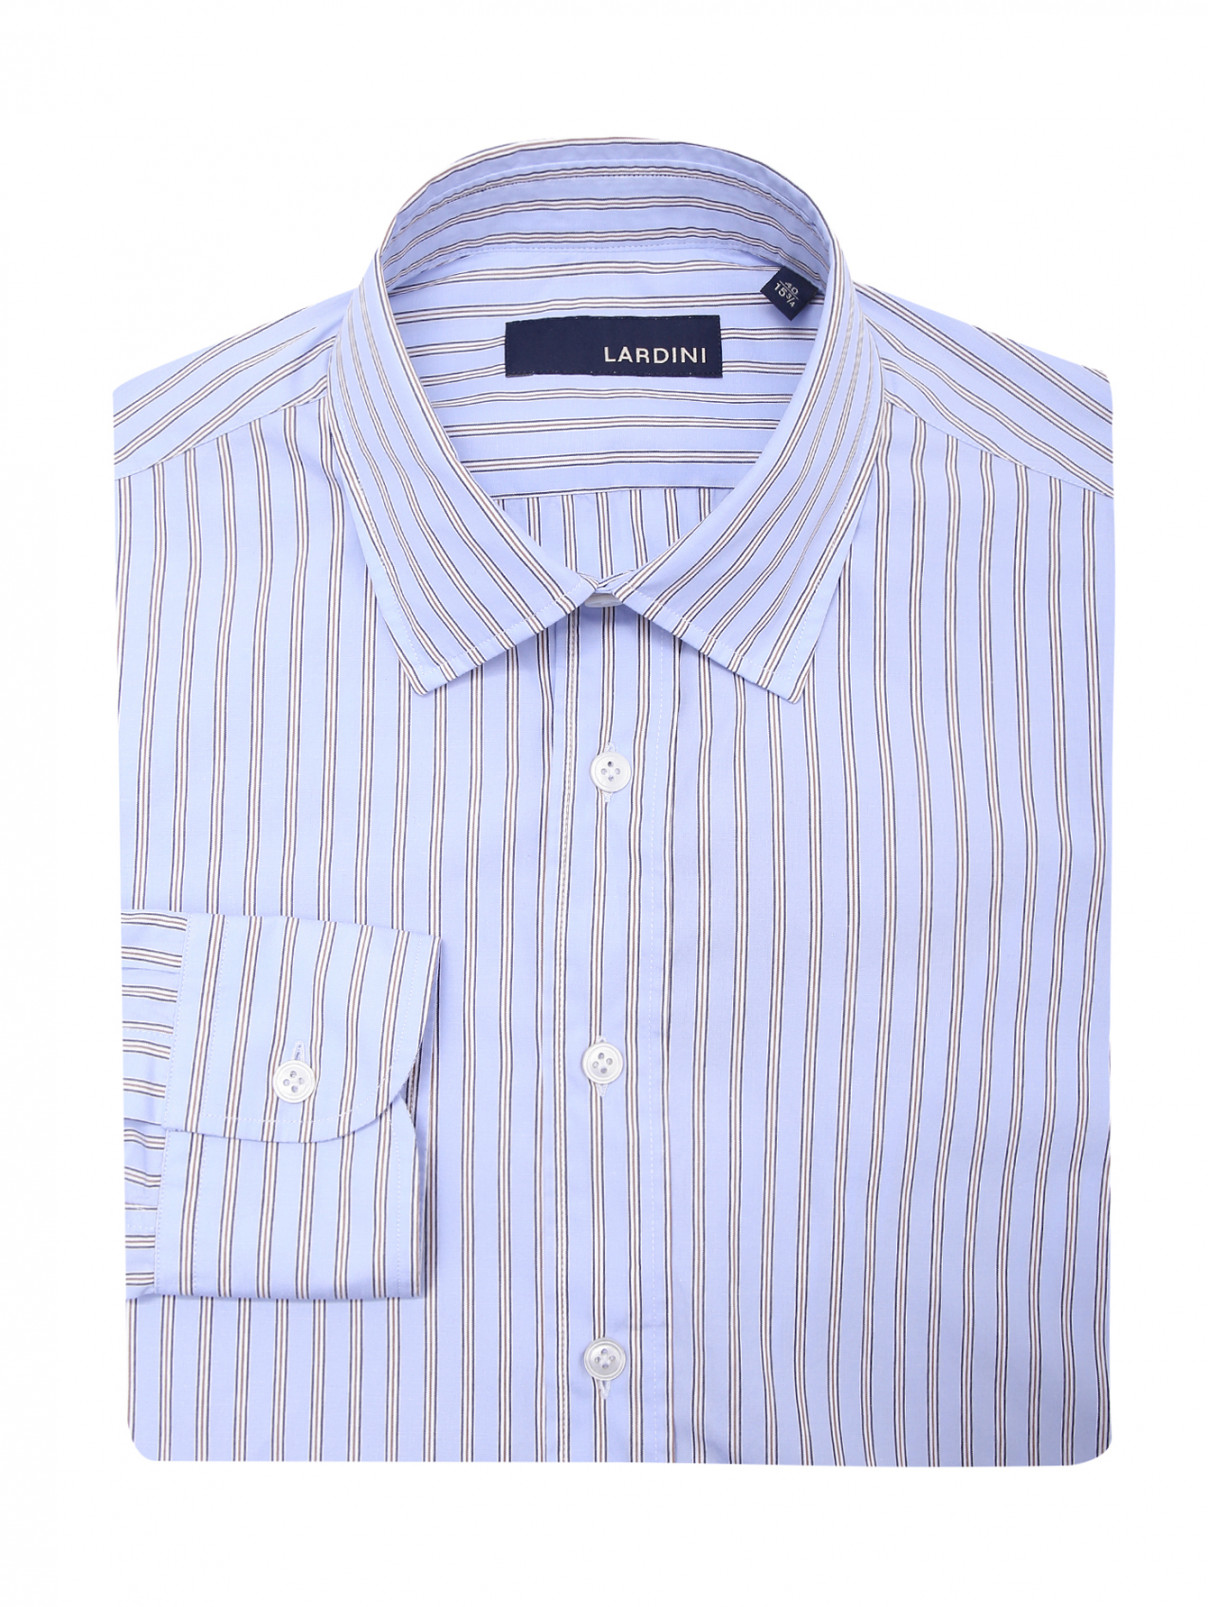 Рубашка из хлопка с узором LARDINI  –  Общий вид  – Цвет:  Синий